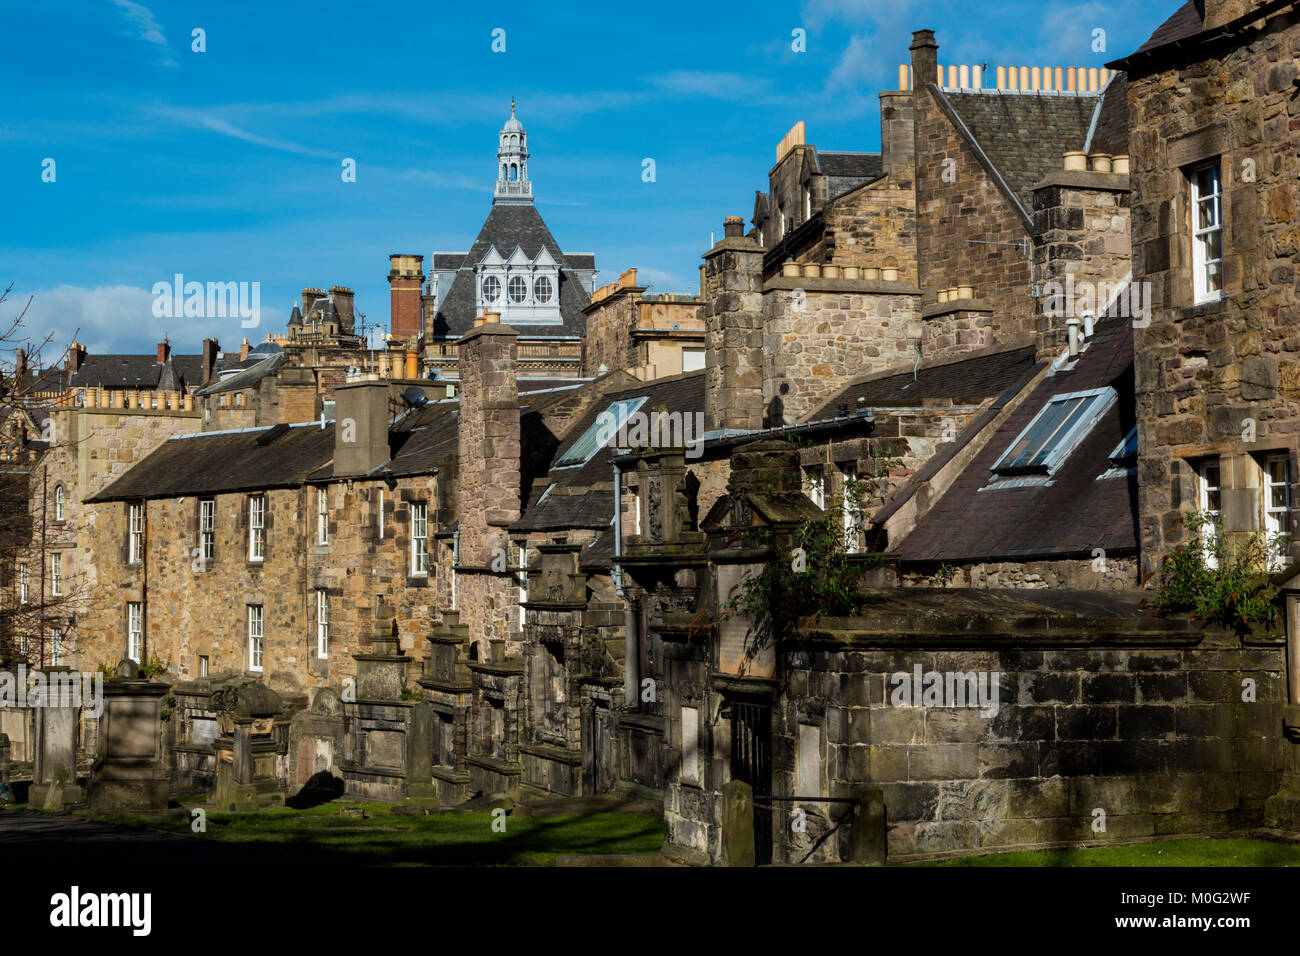 Greyfriars Kirkyard, Edinburgh, Scotland, United Kingdom - Greyfriars Kirkyard is the graveyard established in the city in 1561 Stock Photo